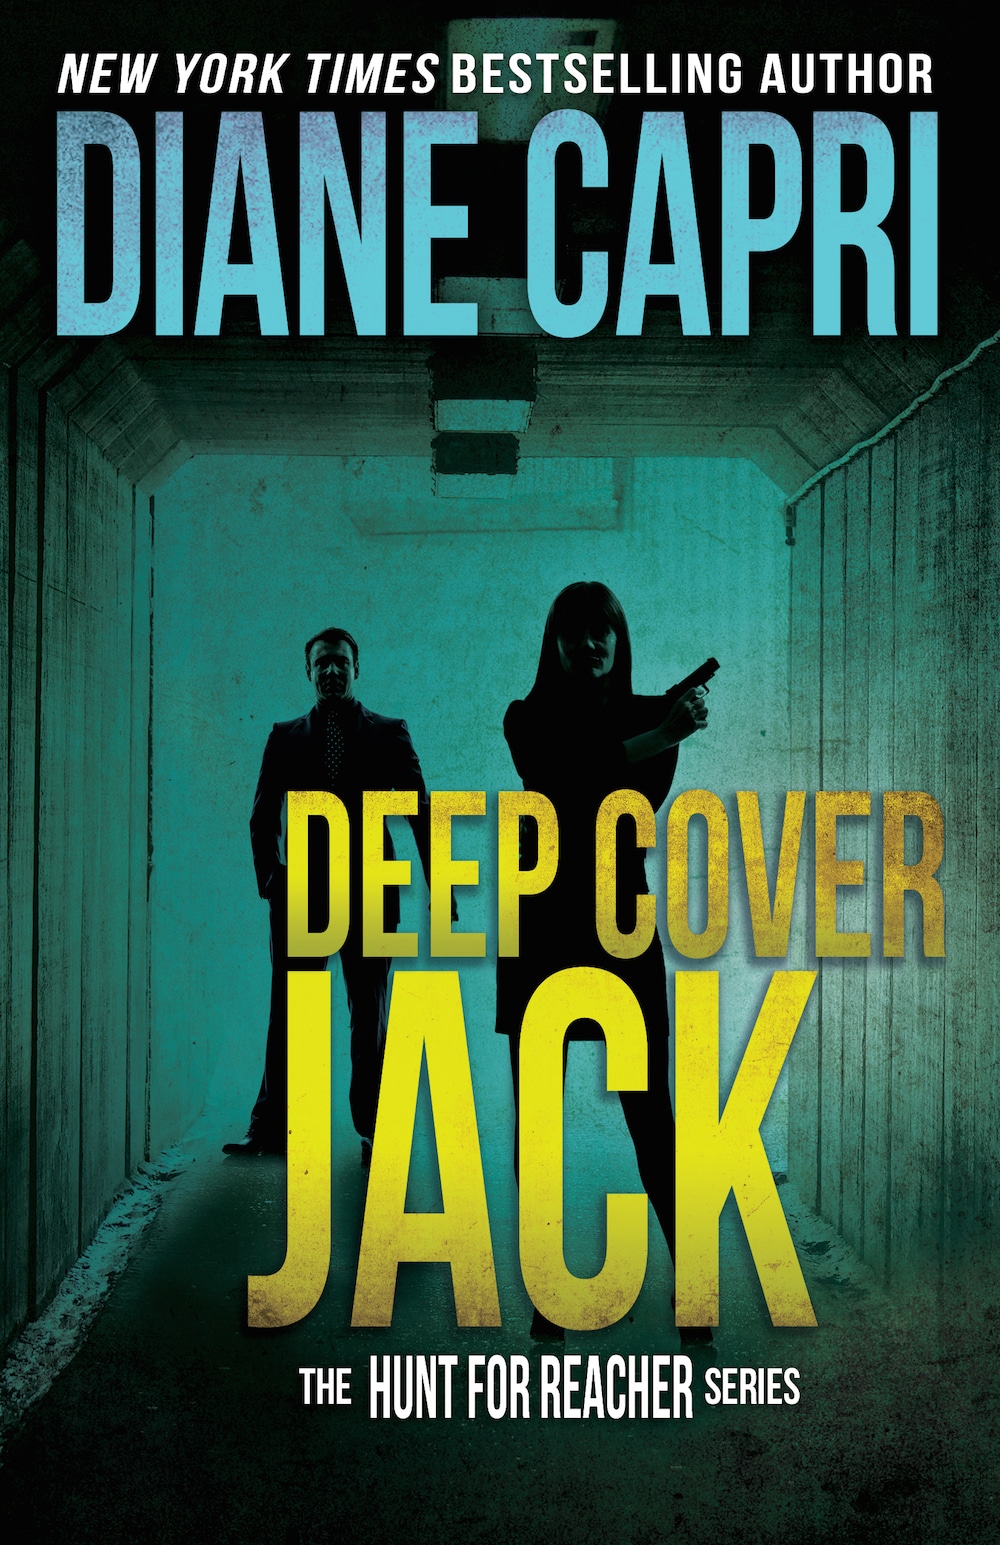 Deep Cover Jack by Diane Capri